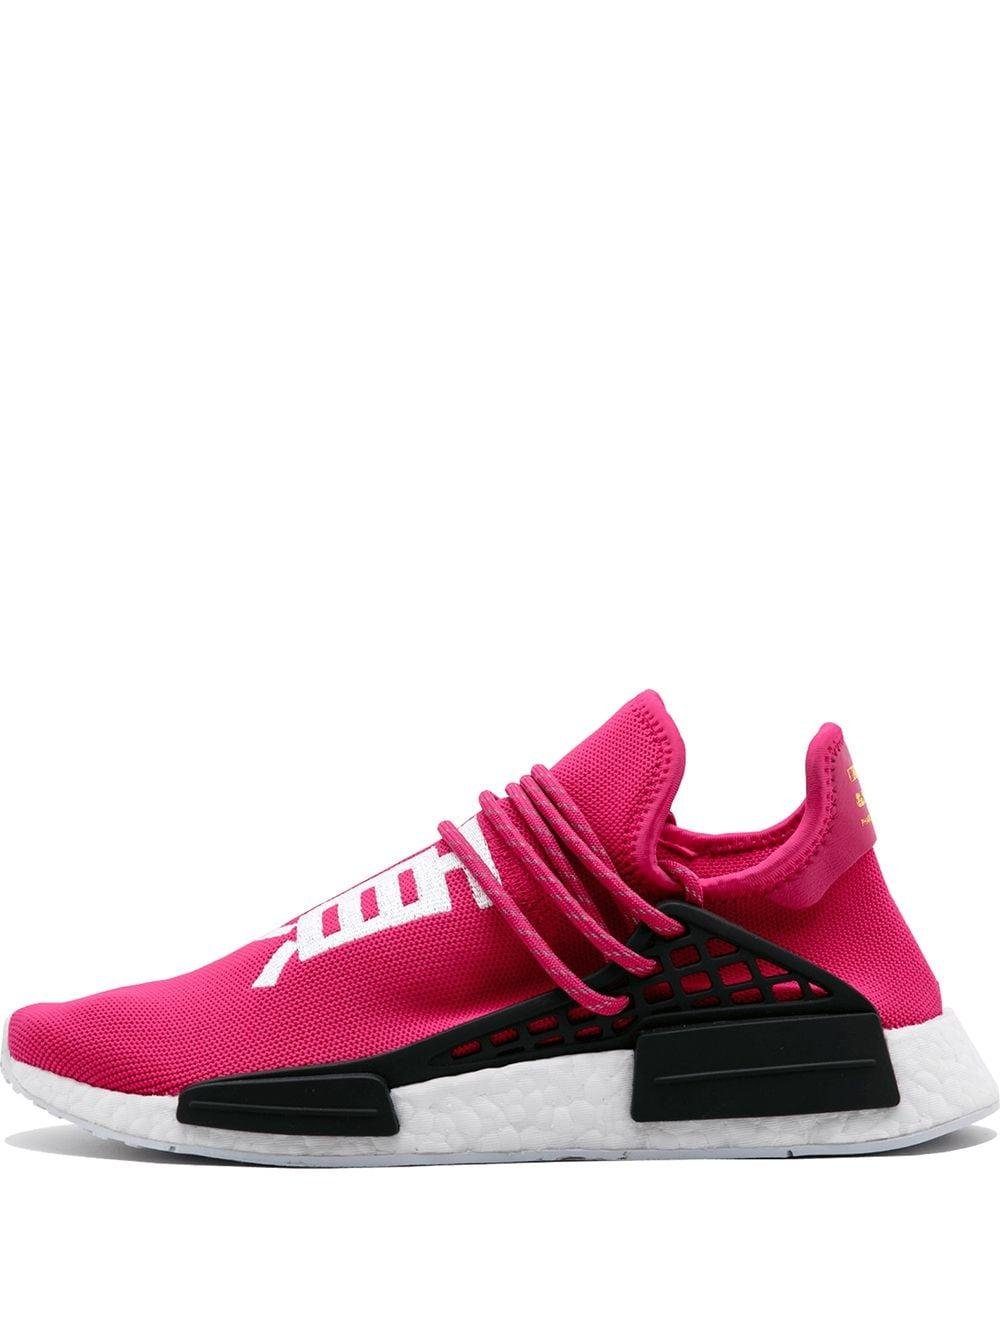 adidas pharrell williams pink